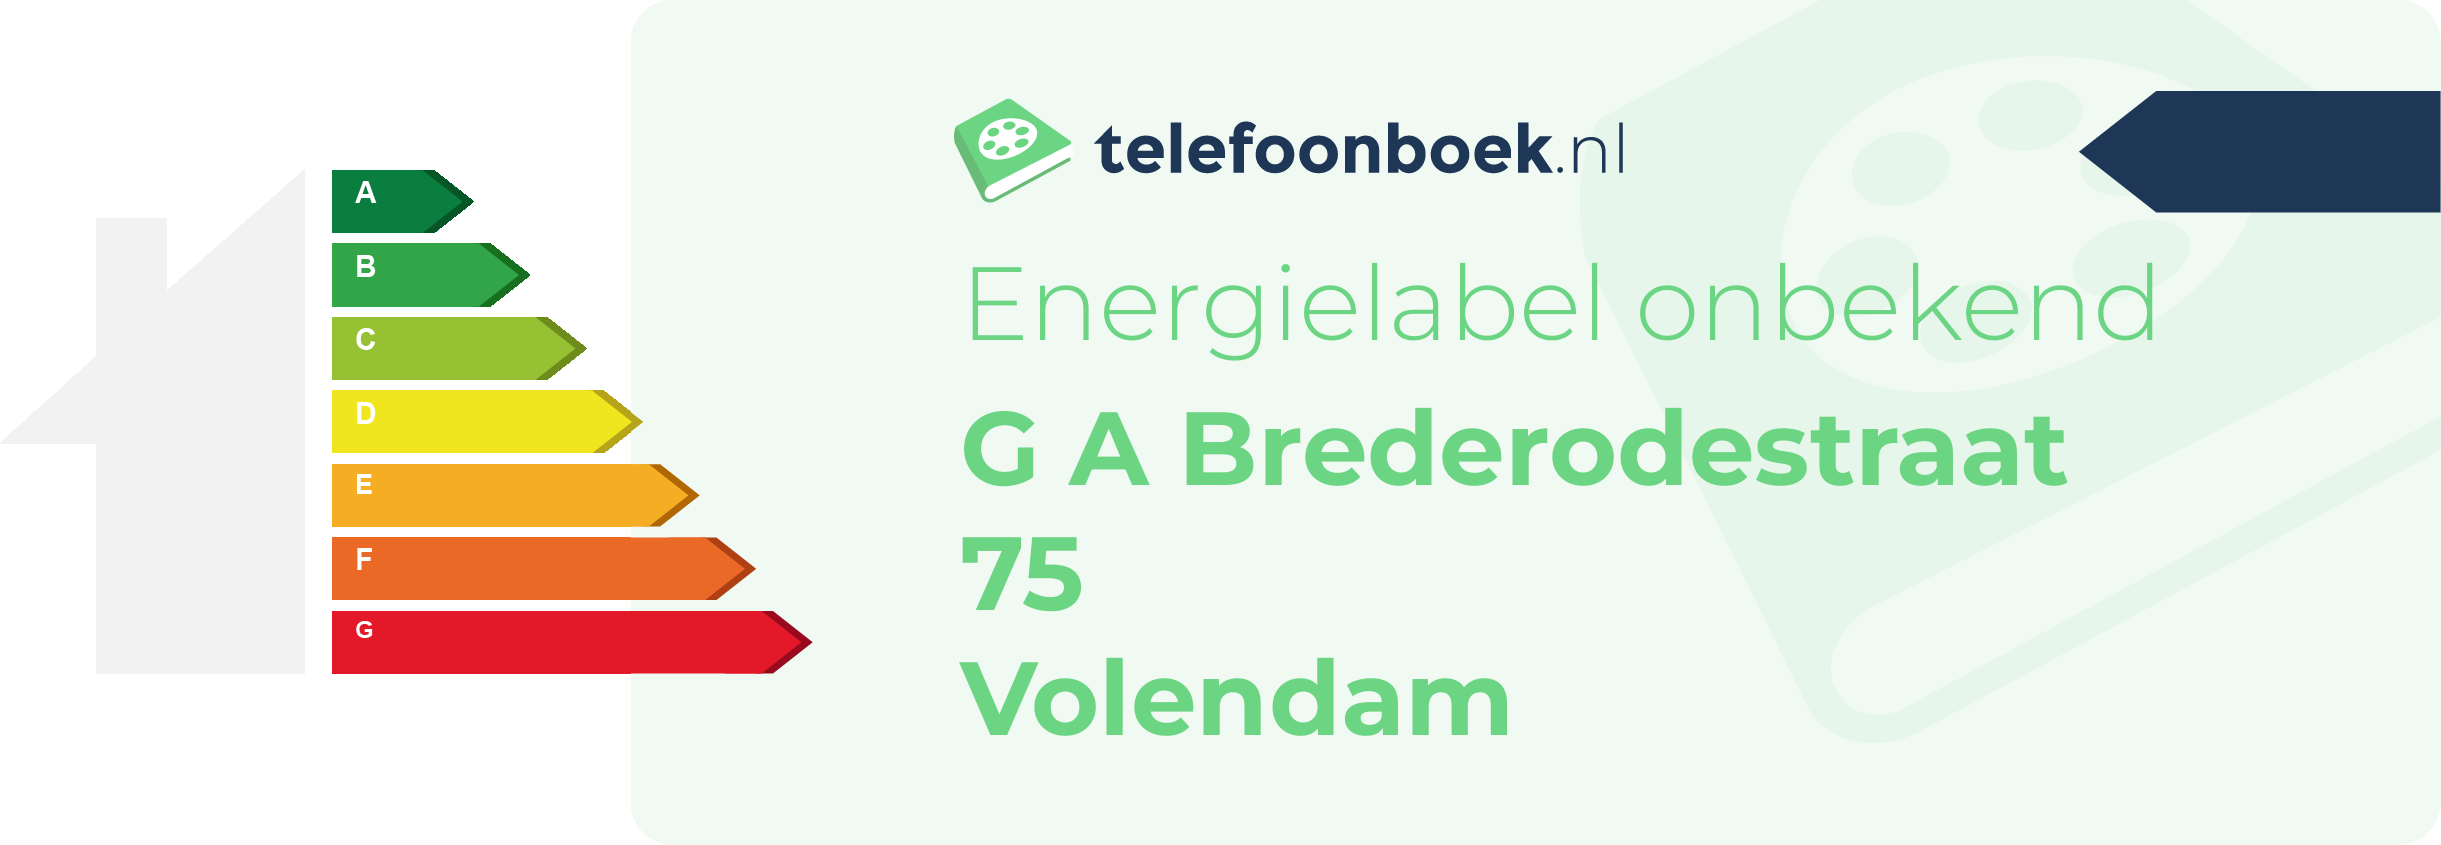 Energielabel G A Brederodestraat 75 Volendam